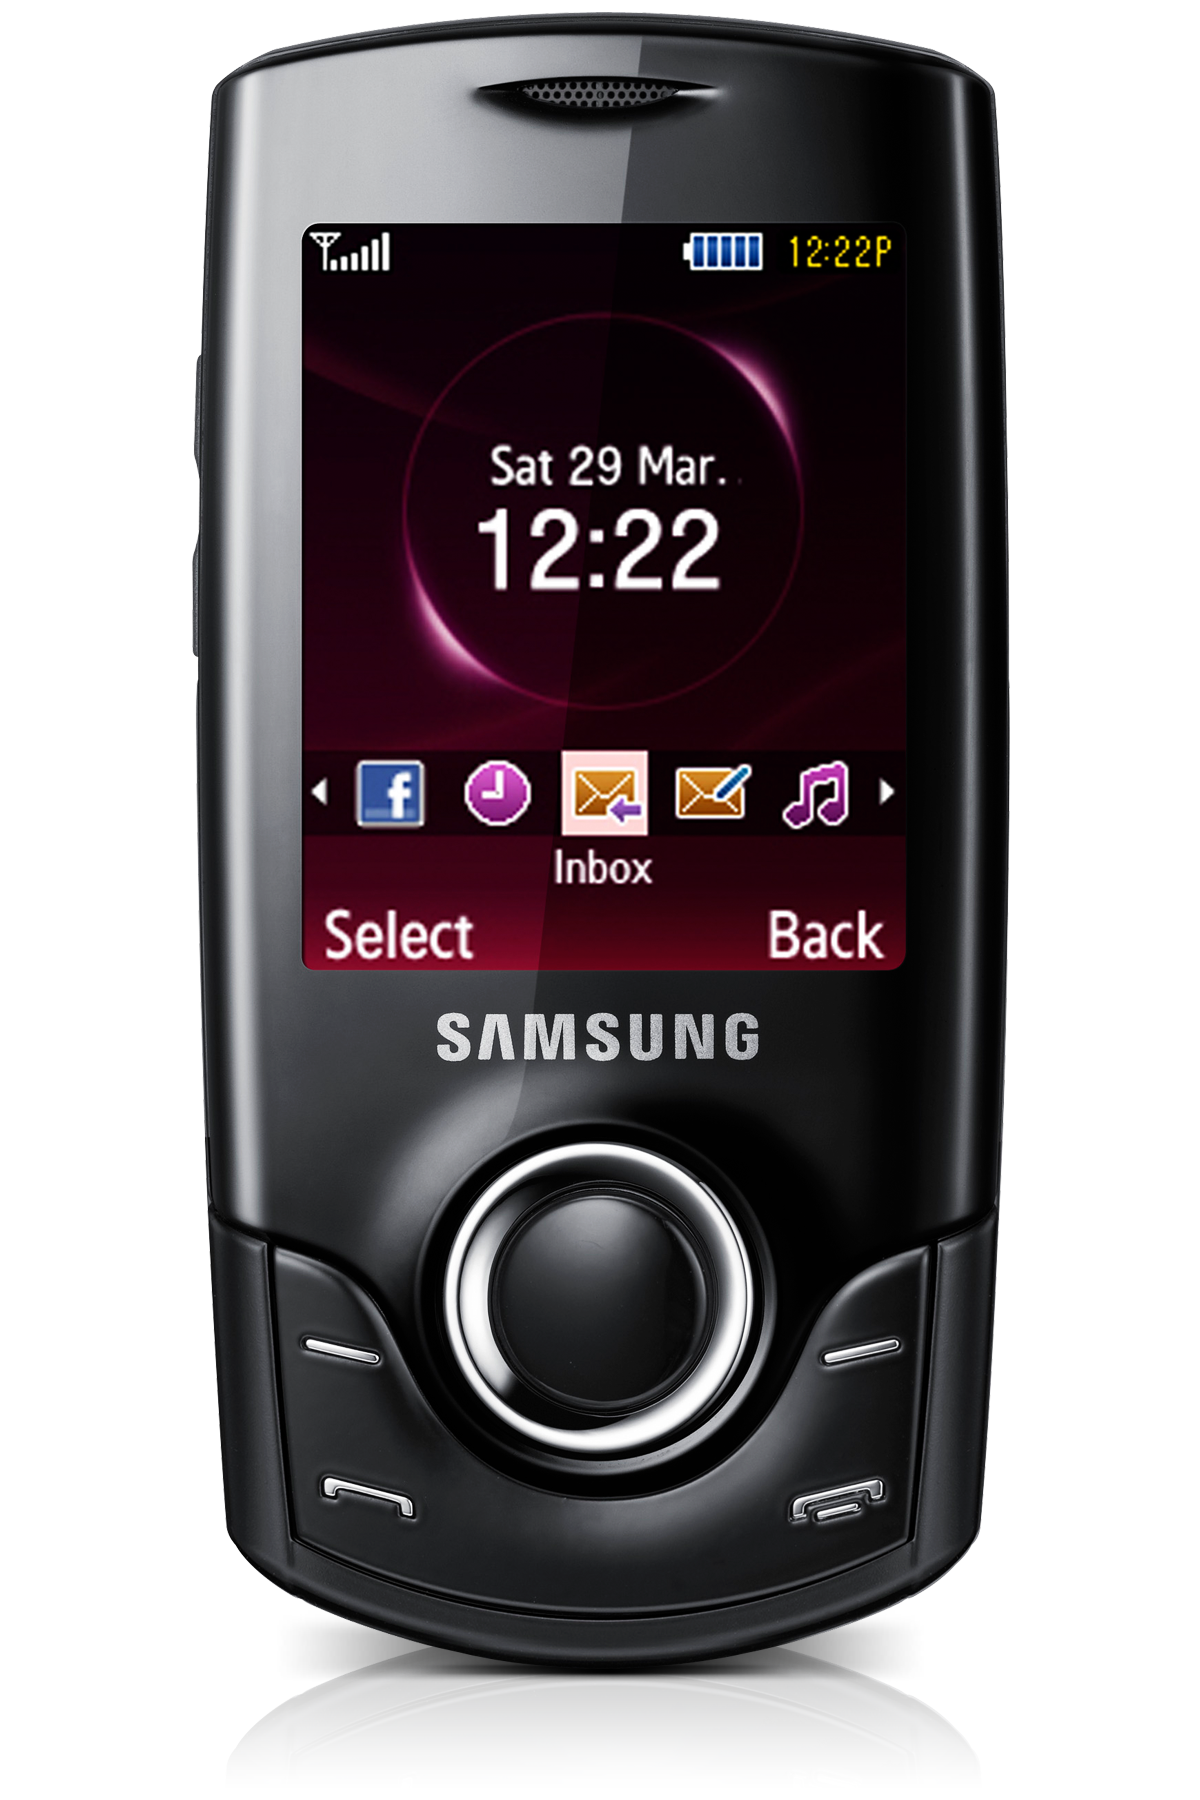 S3100 | Samsung Support UK1200 x 1800